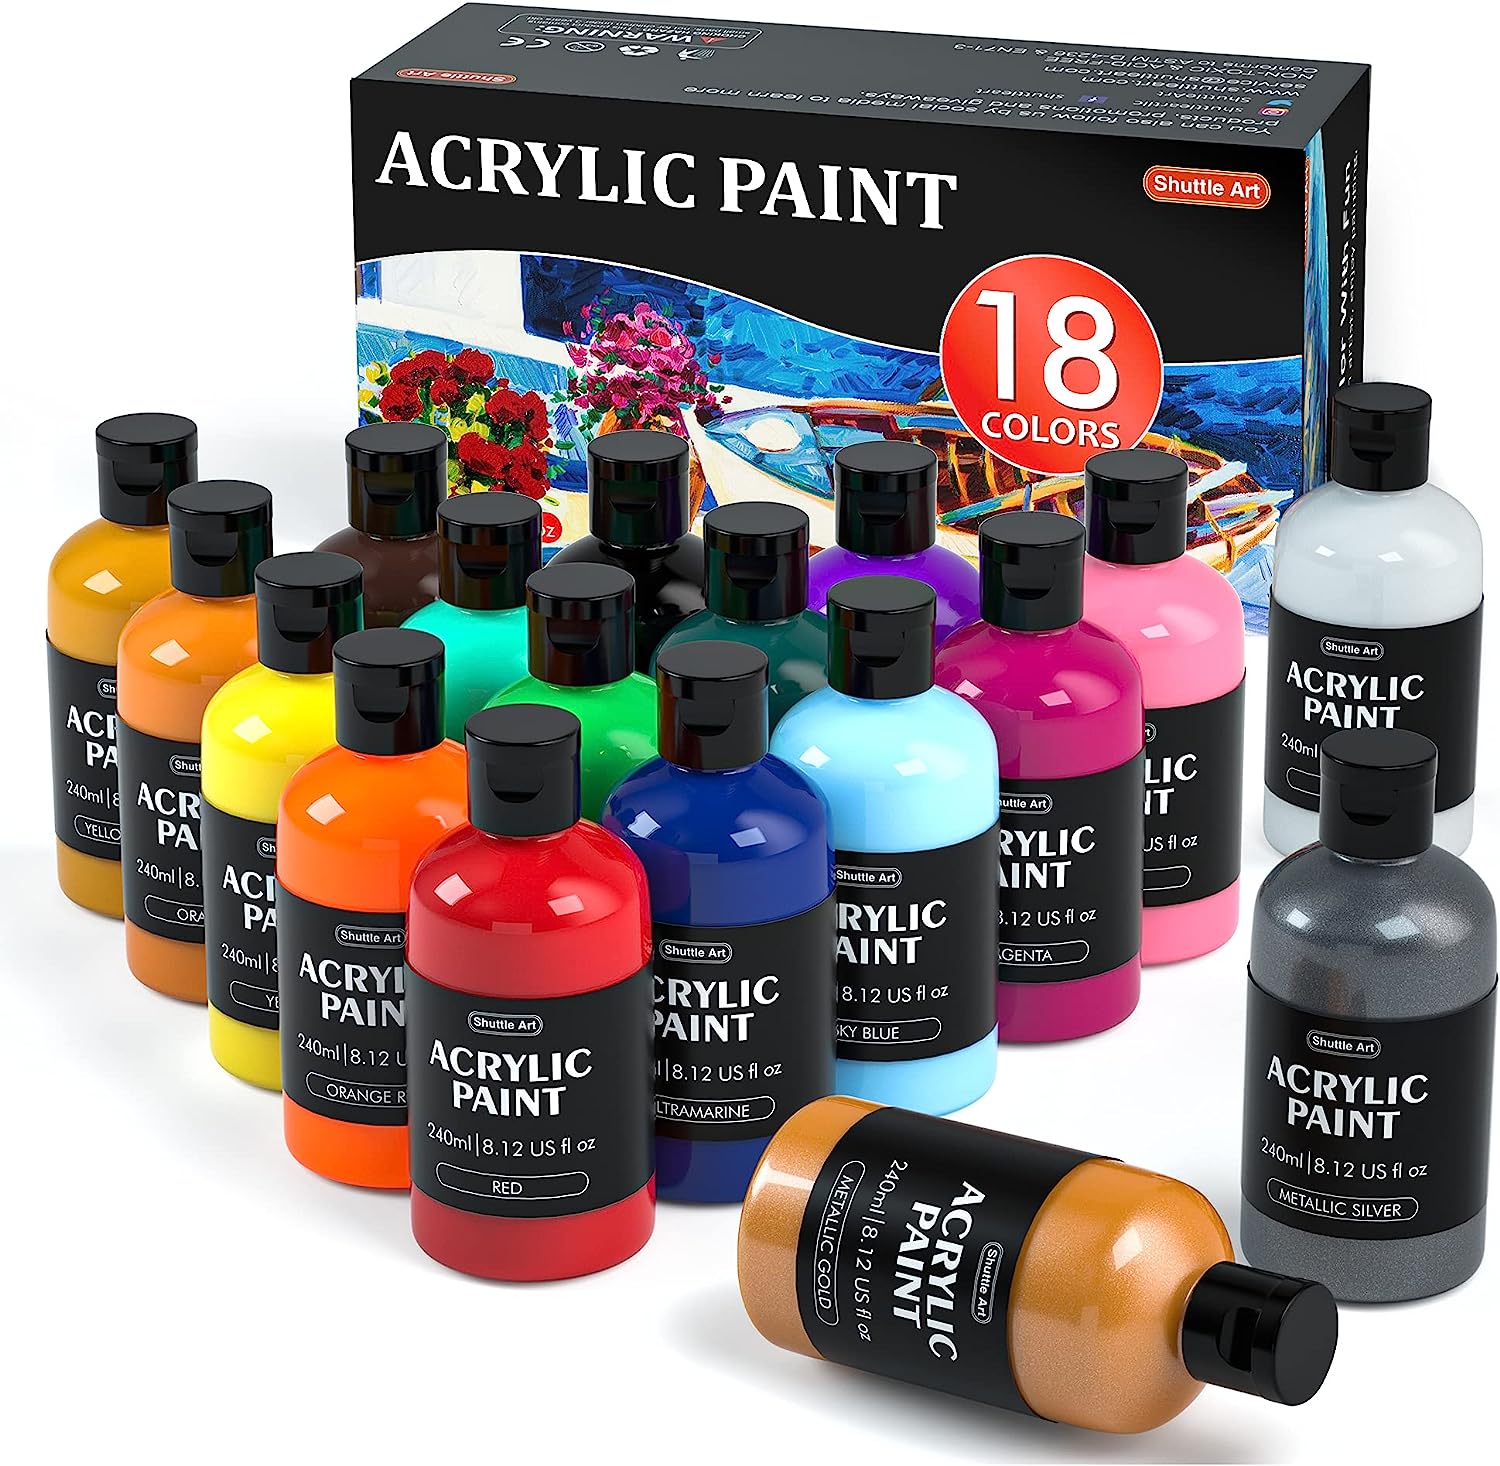 Shuttle Art Acrylic Paint, 18 Colors Acrylic Paint [...]